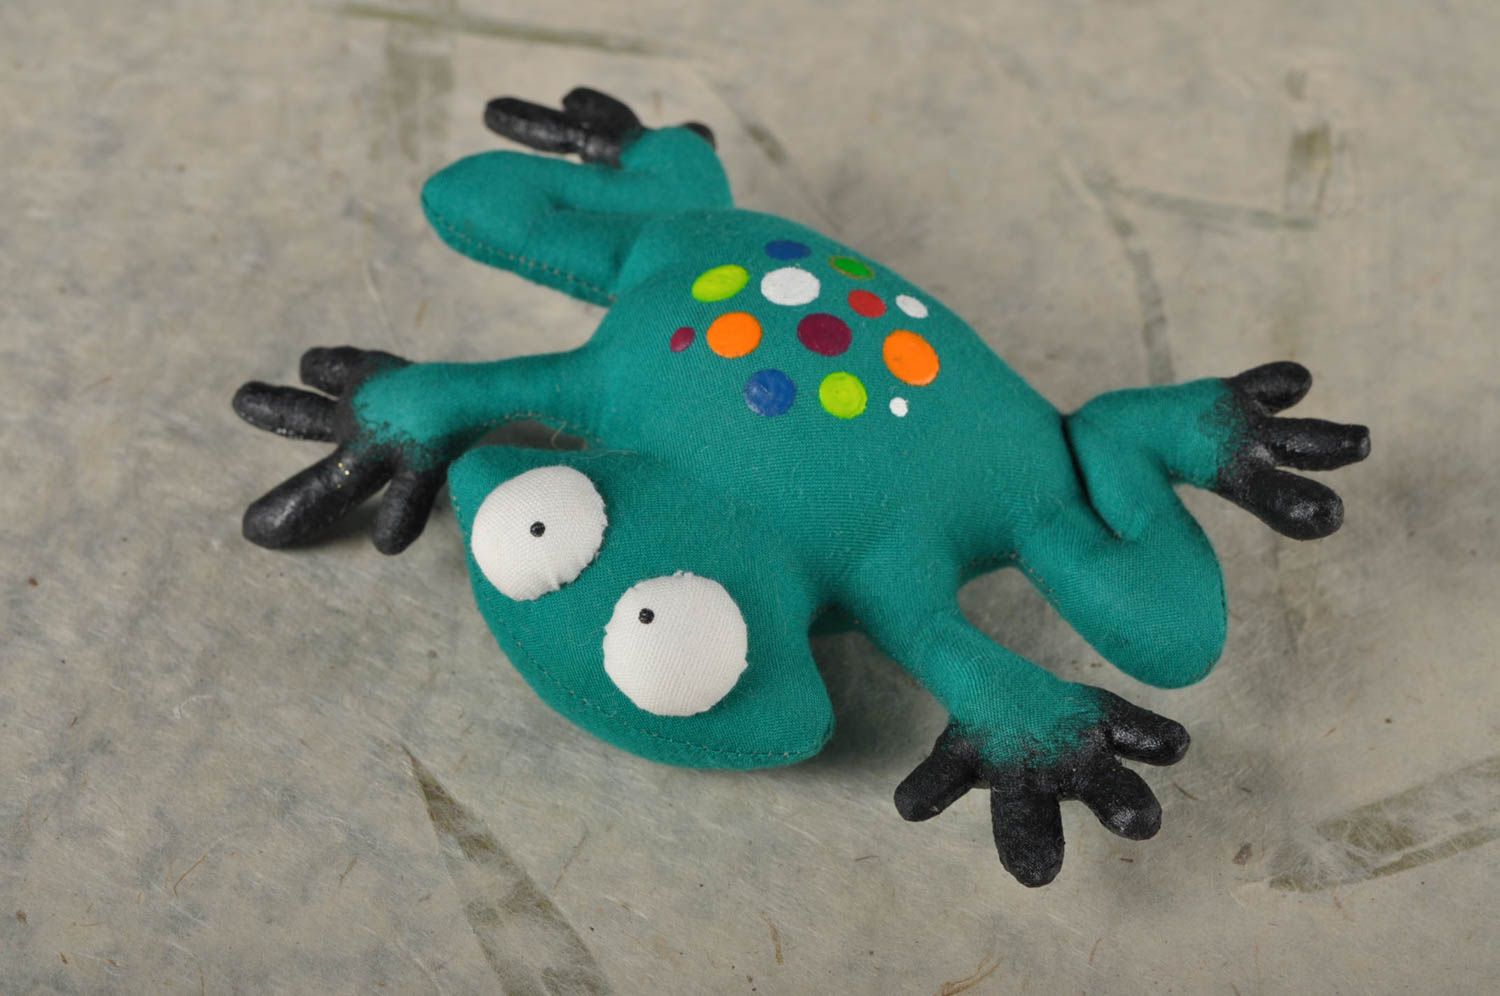 Handmade toy for children designer soft toy for kids nursery decor ideas photo 1